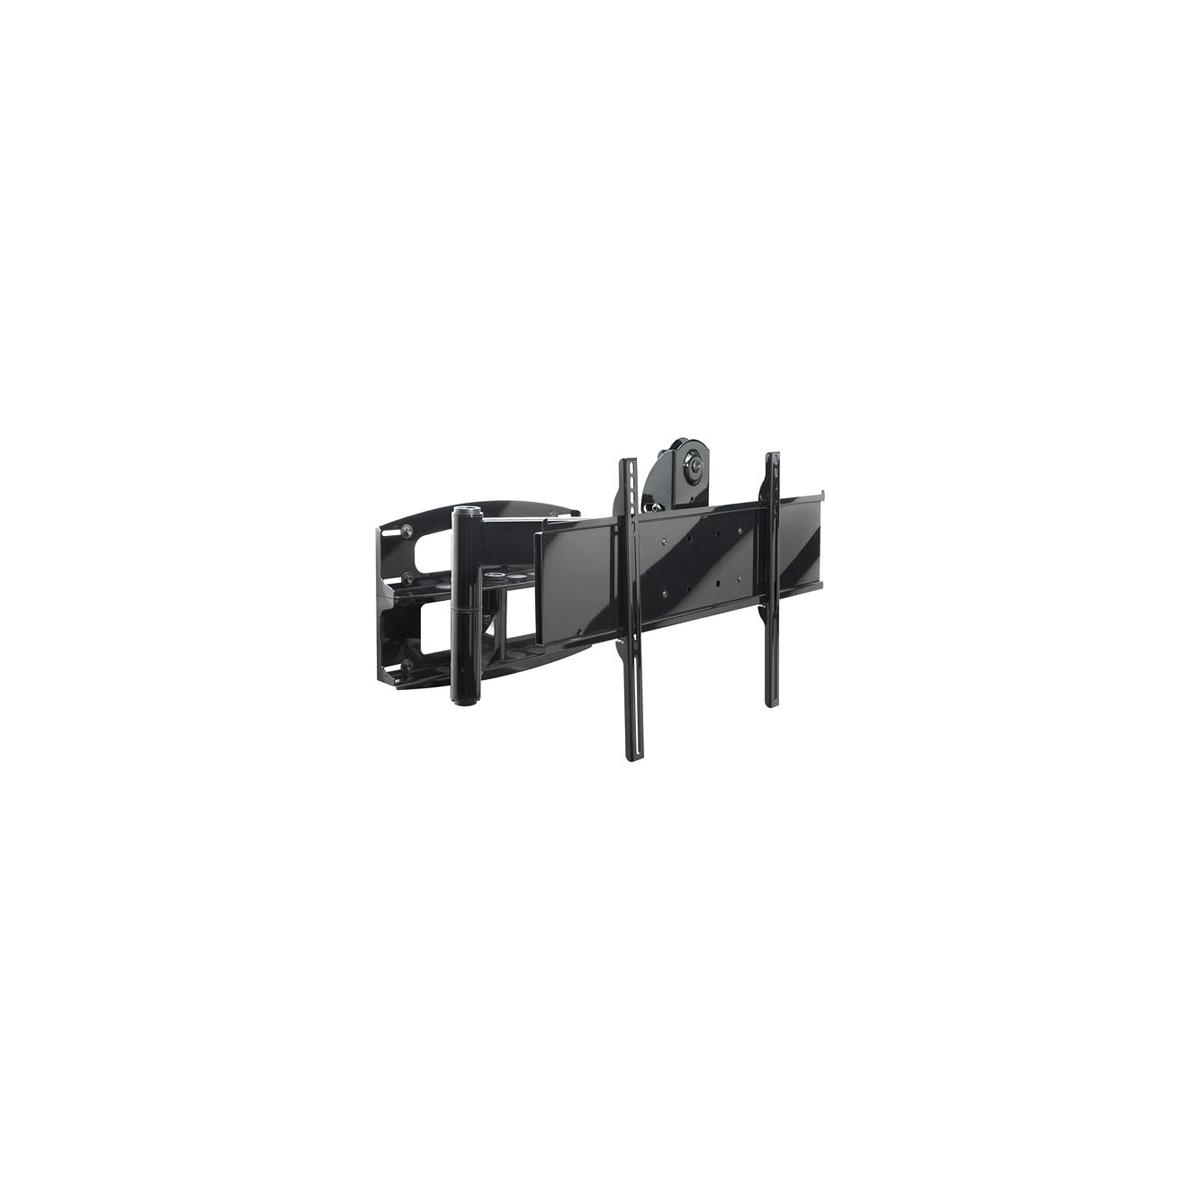 Peerless Articulating Wall Arm with Vertical Adjustment, High Gloss Piano Black -  PLAV60-UNLP-GB